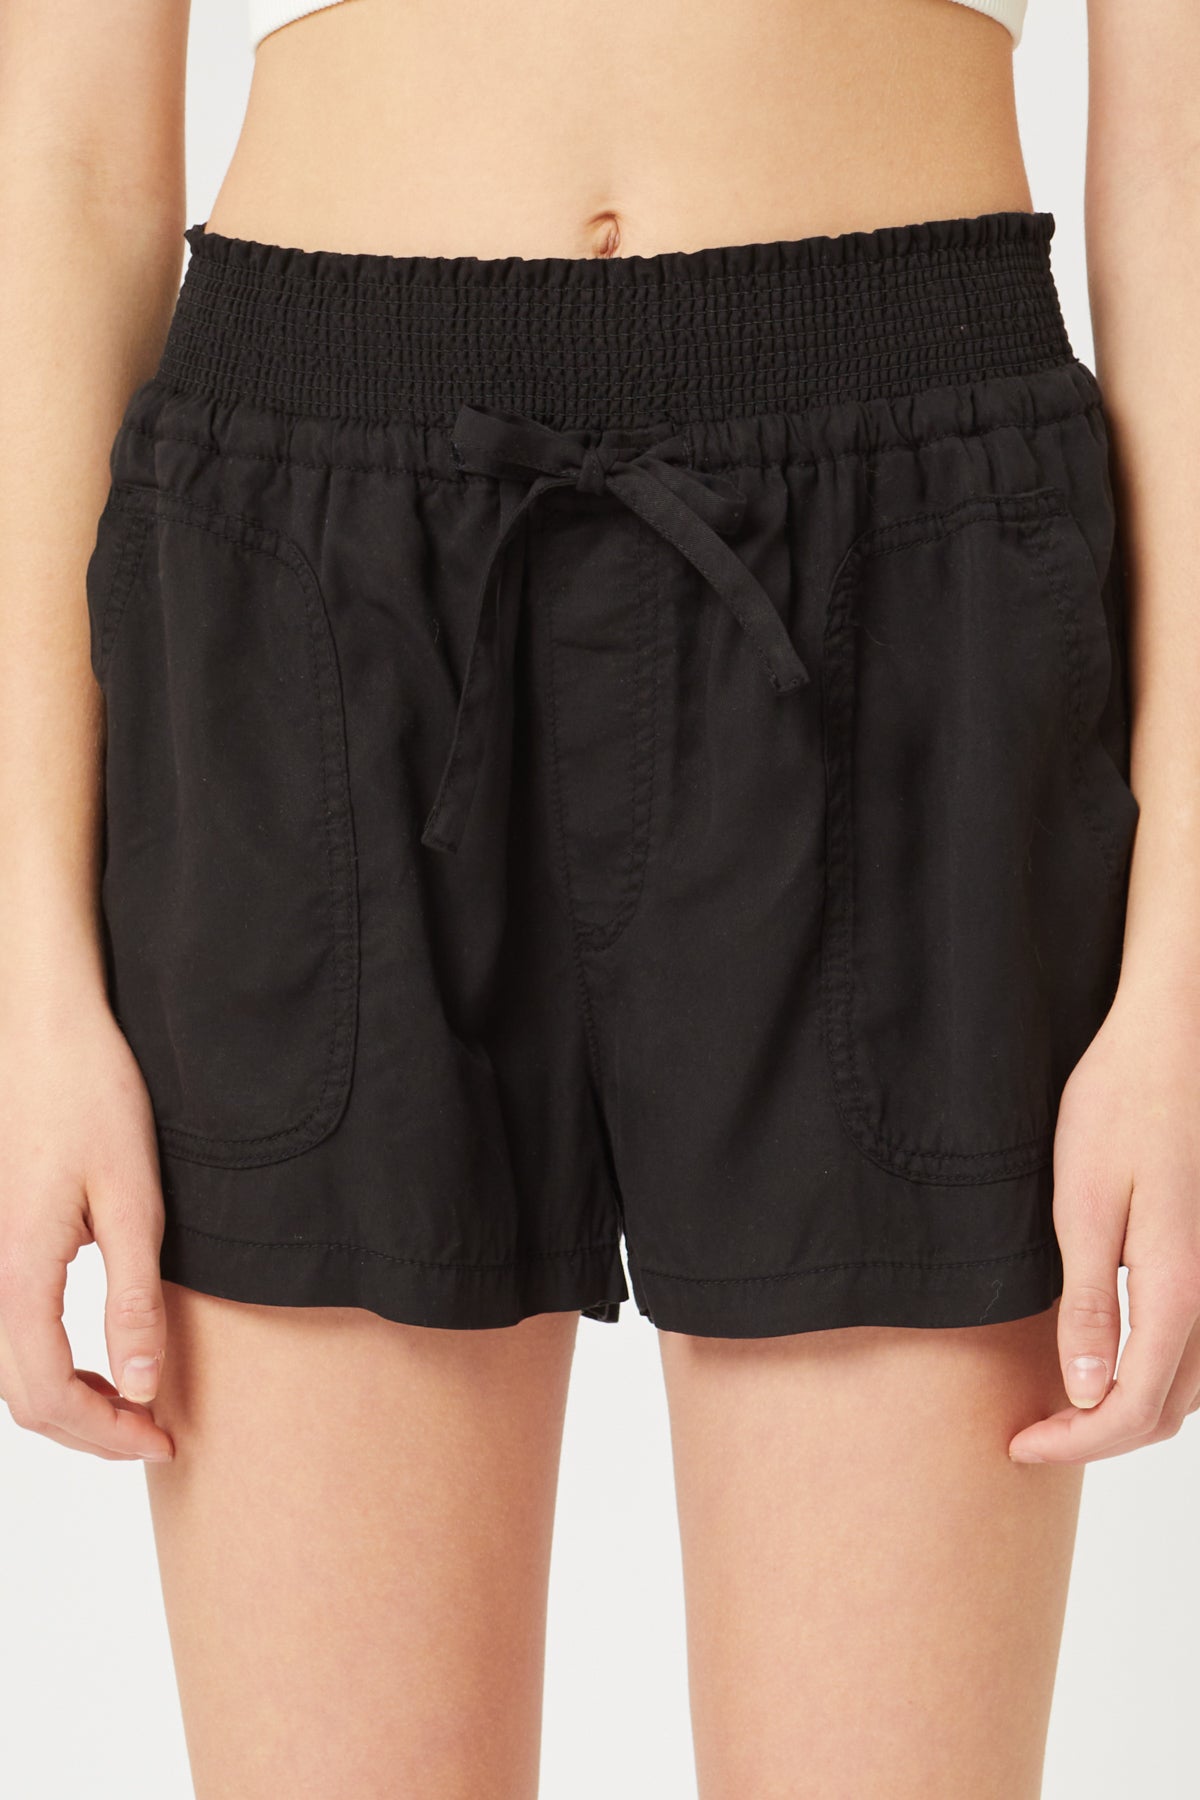 Anini Beach Shorts